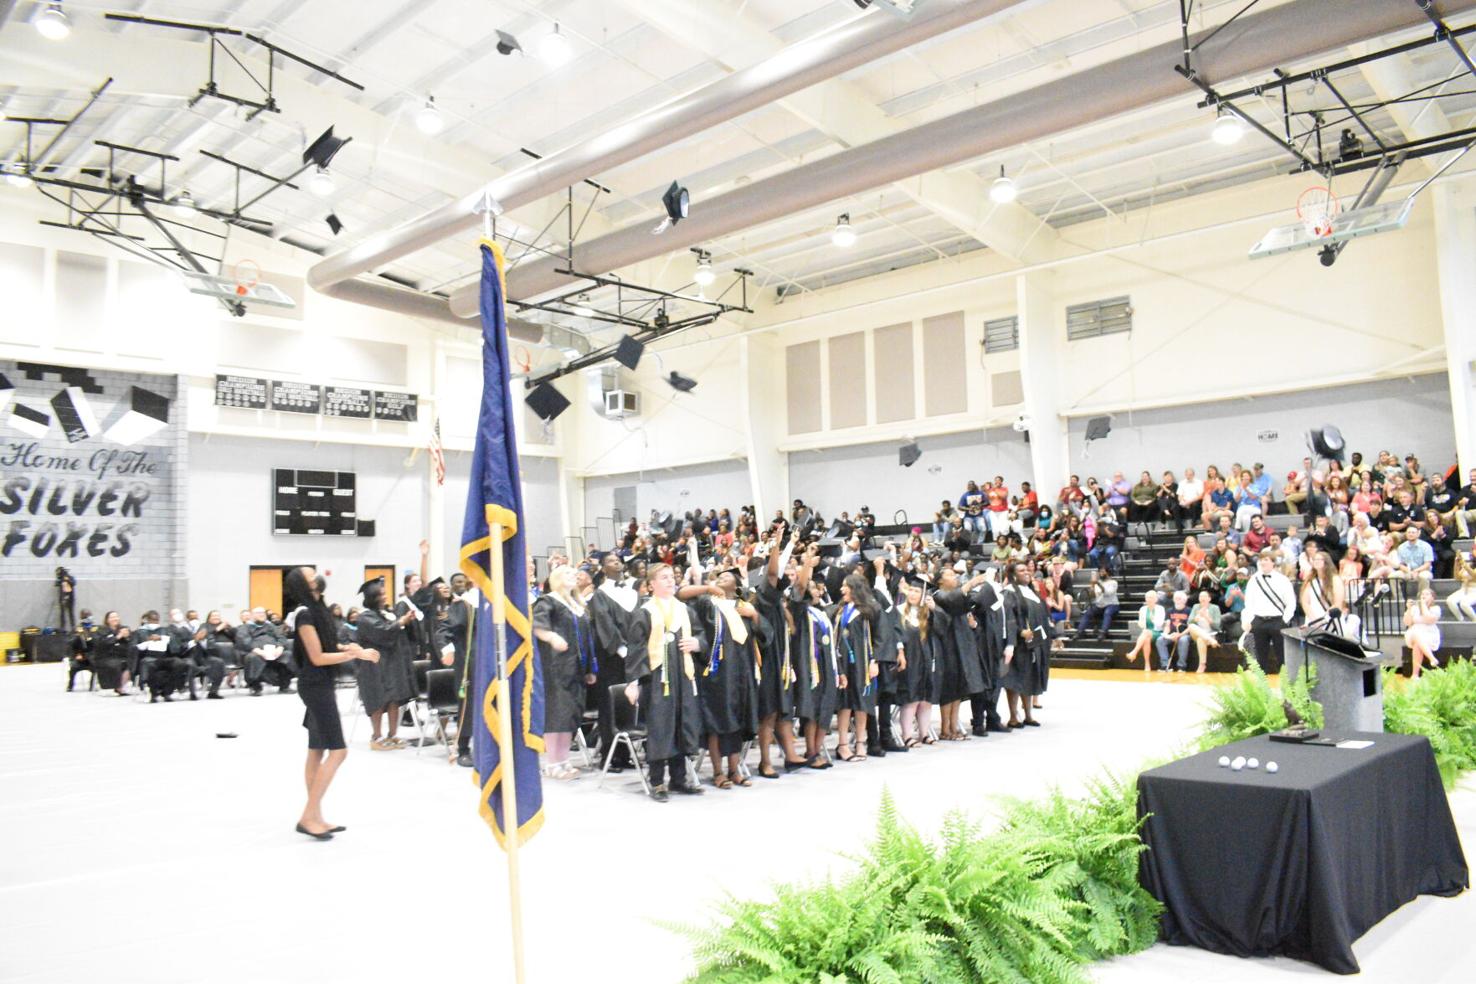 PHOTOS Lamar High School graduation on May 27, 2022